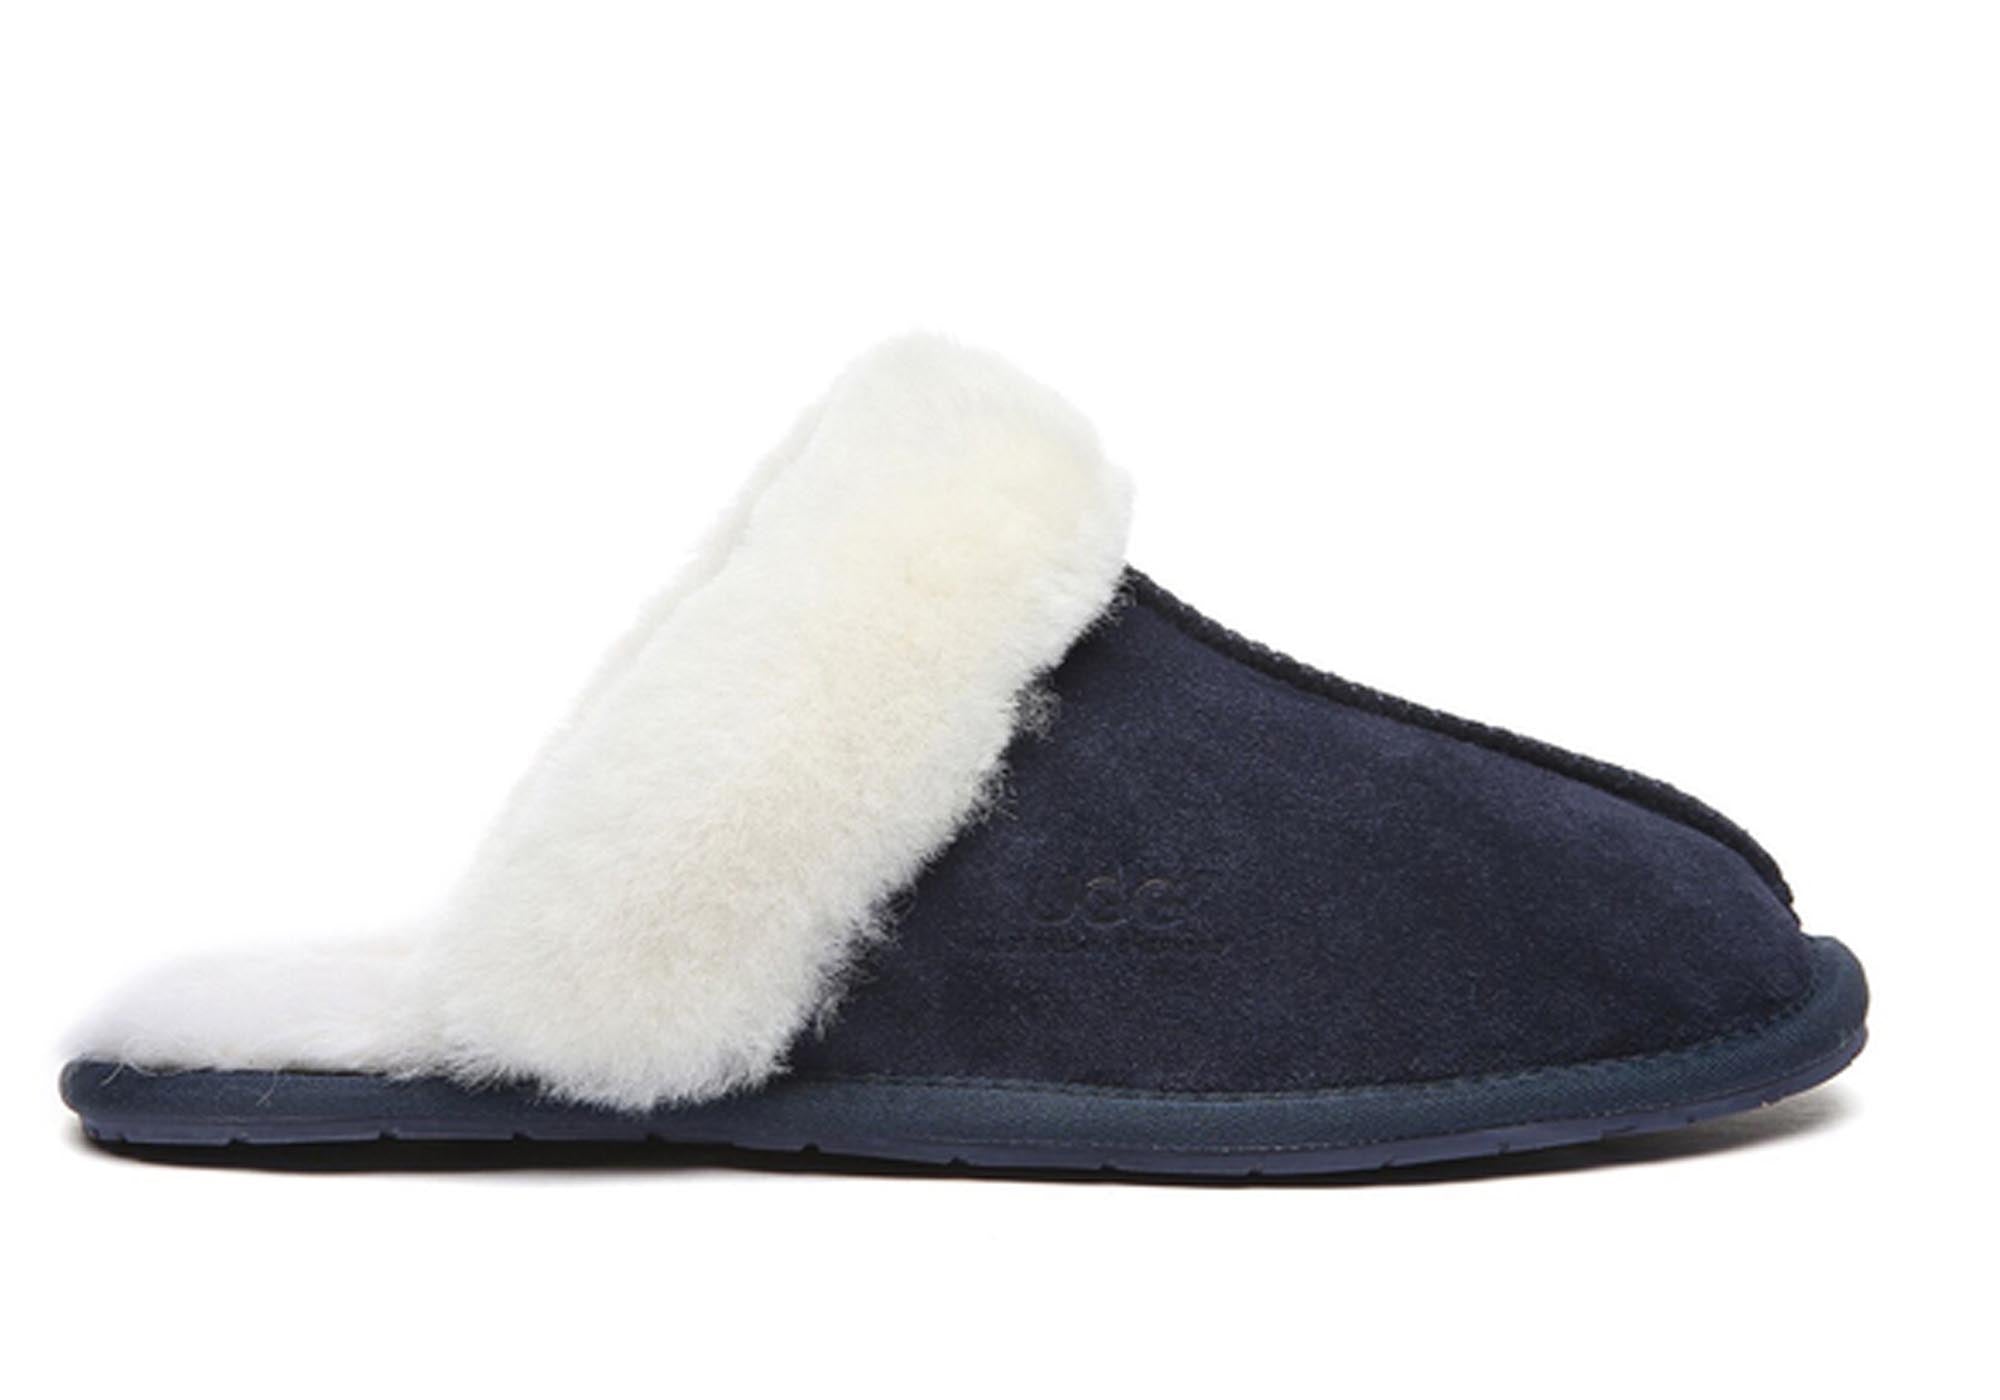 ugg slippers navy blue